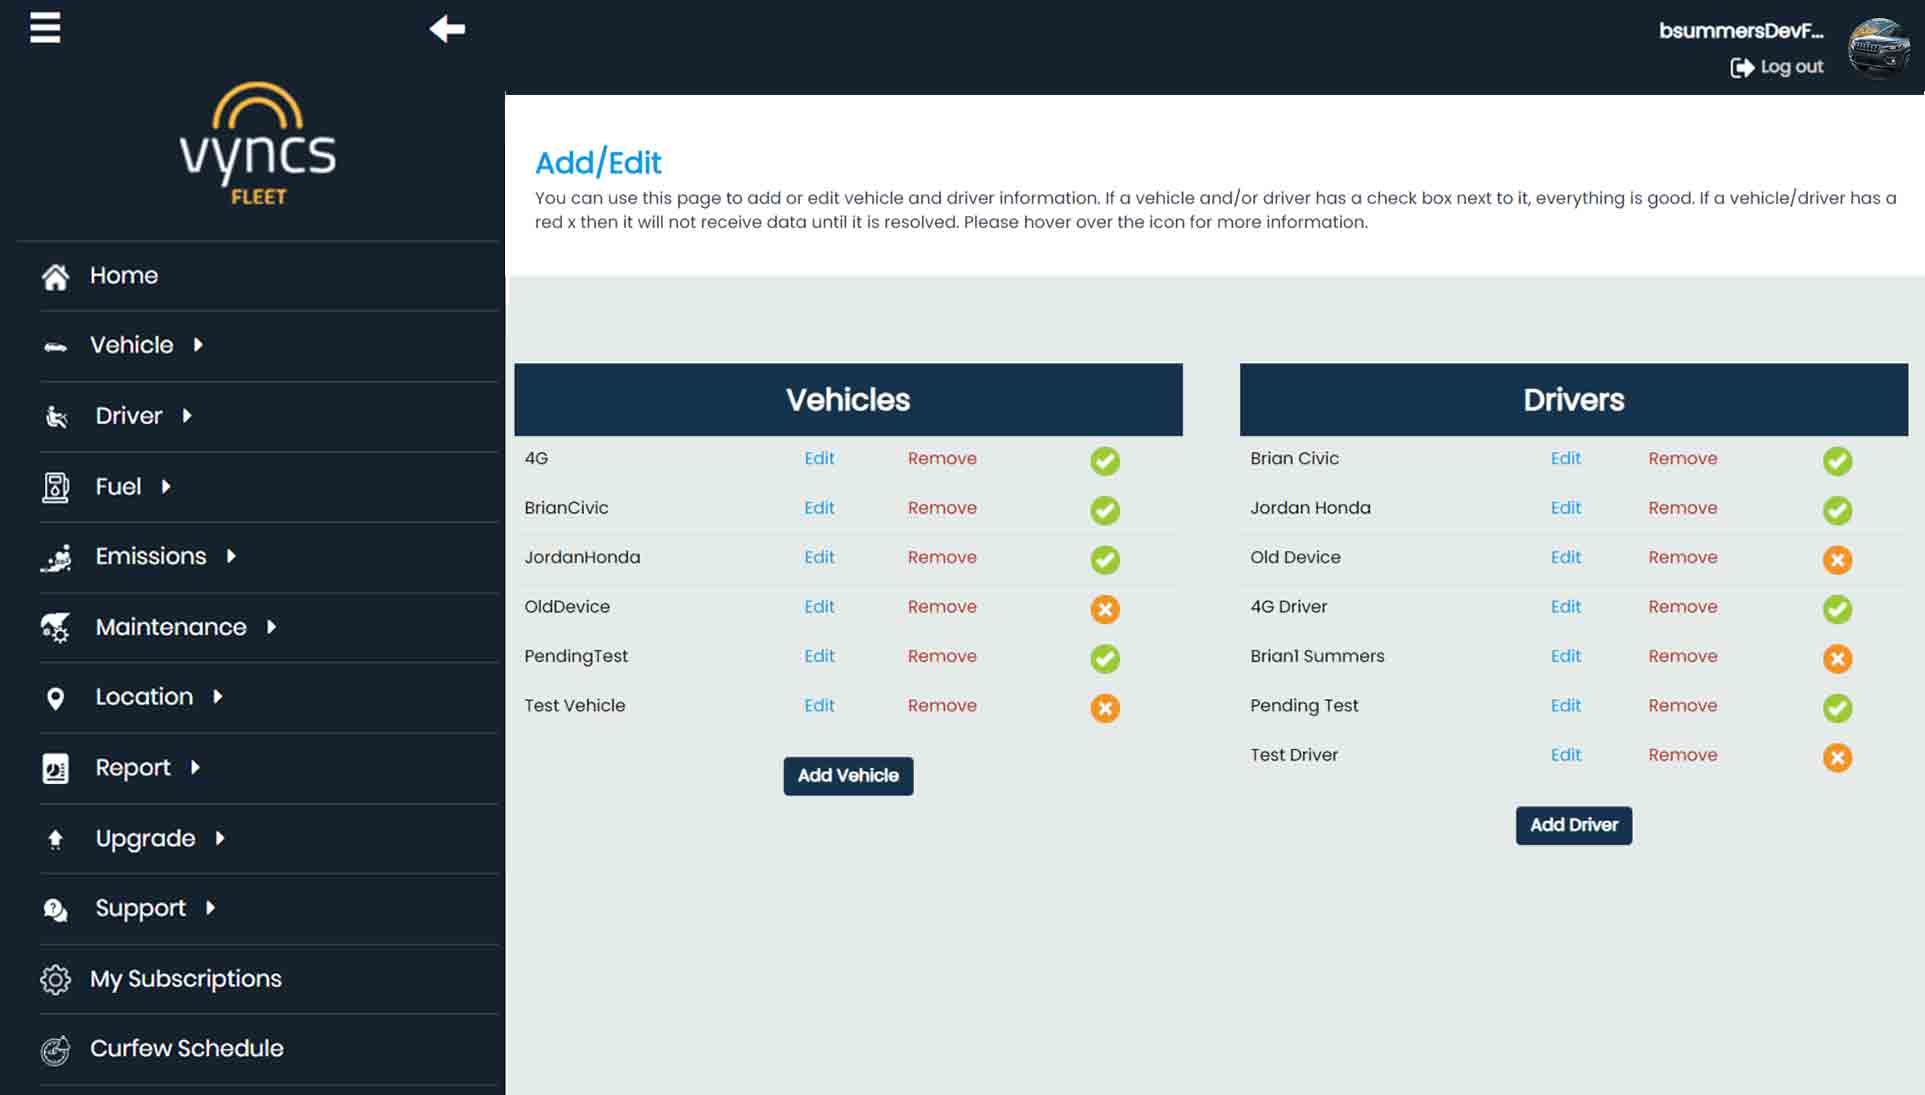 Add/edit vehicles & drivers_vyncs  gps tracker